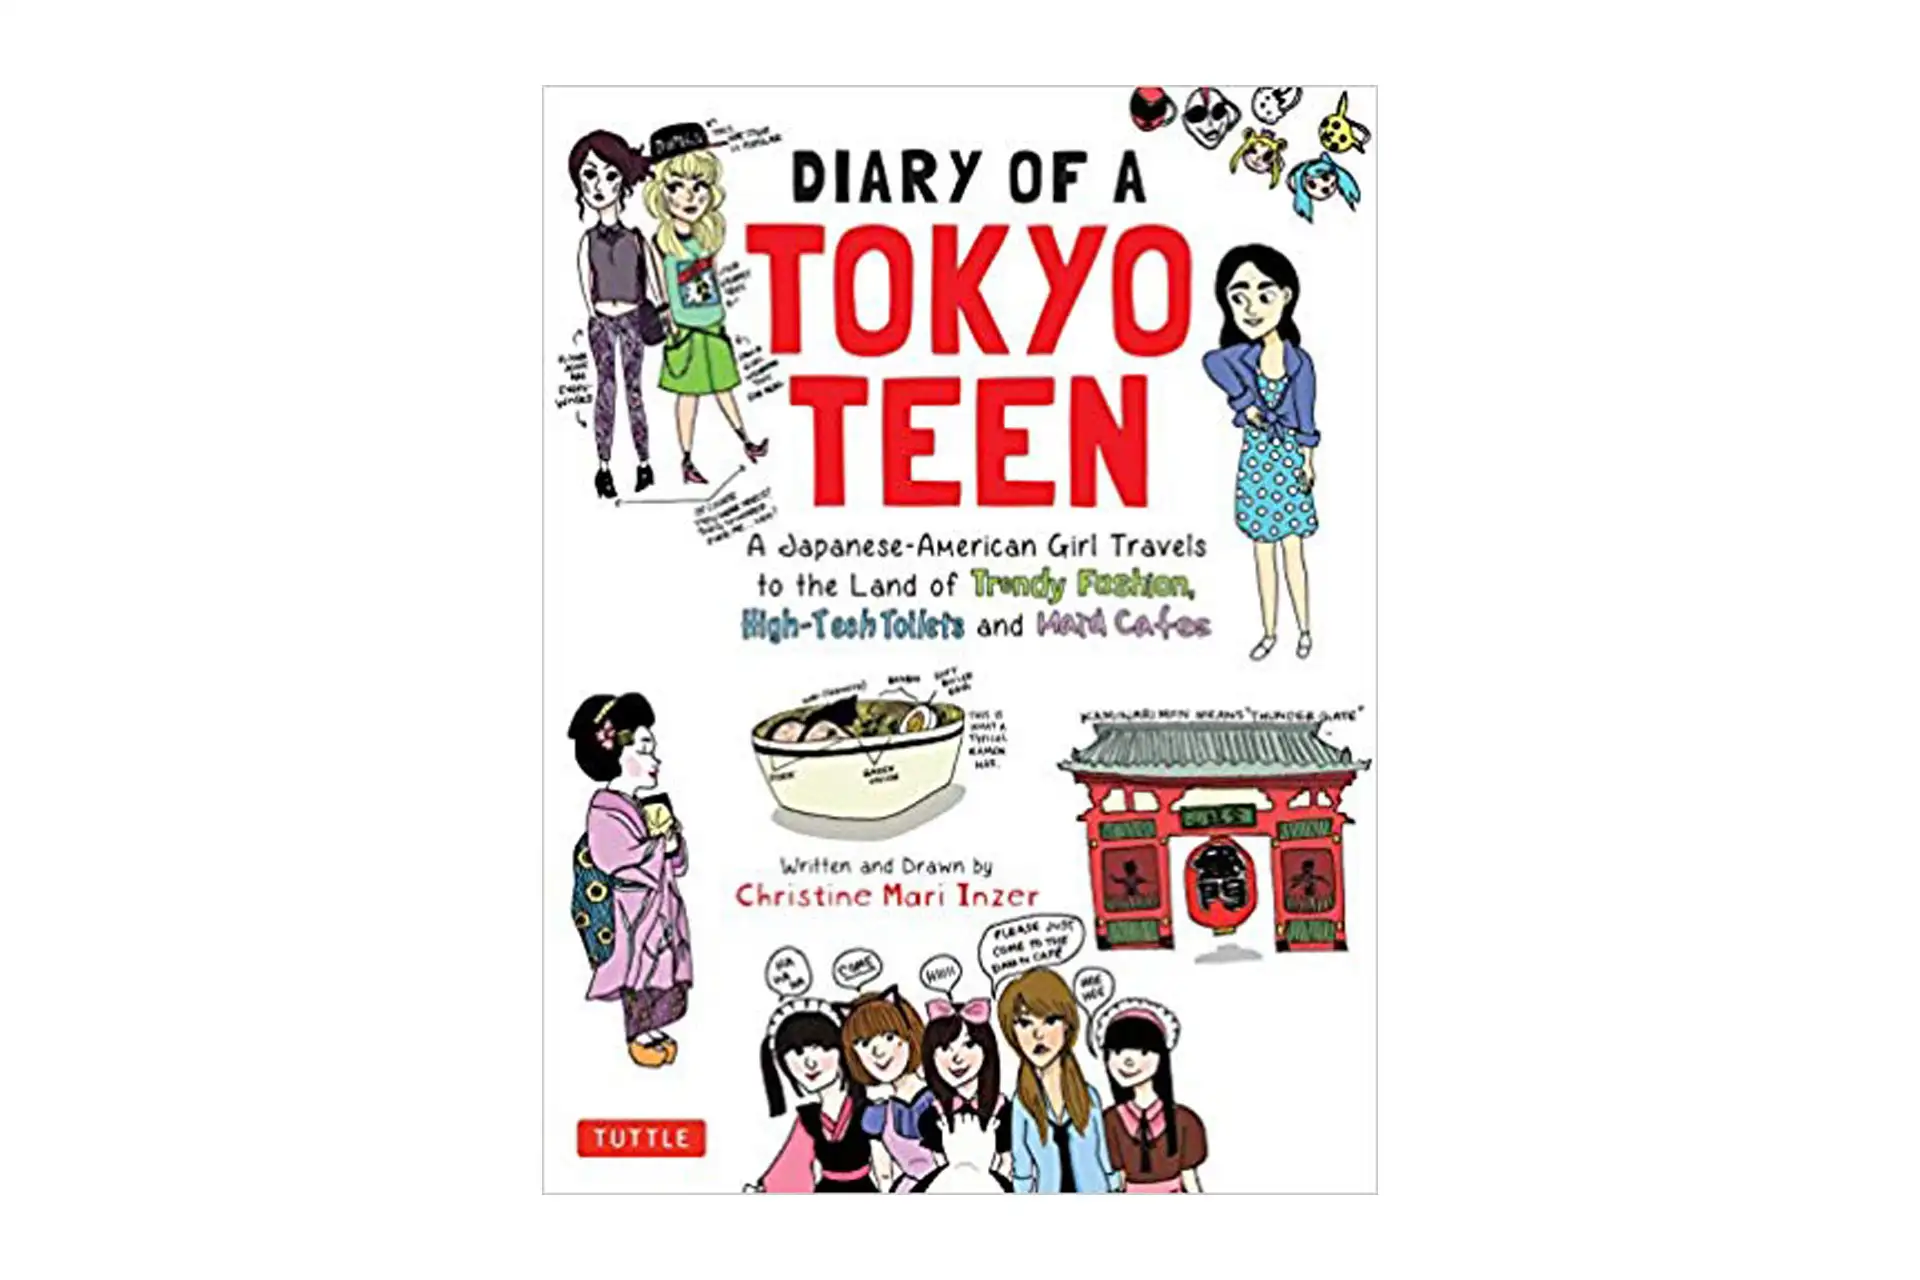 Diary Of a Tokyo Teen Book; Courtesy of Amazon